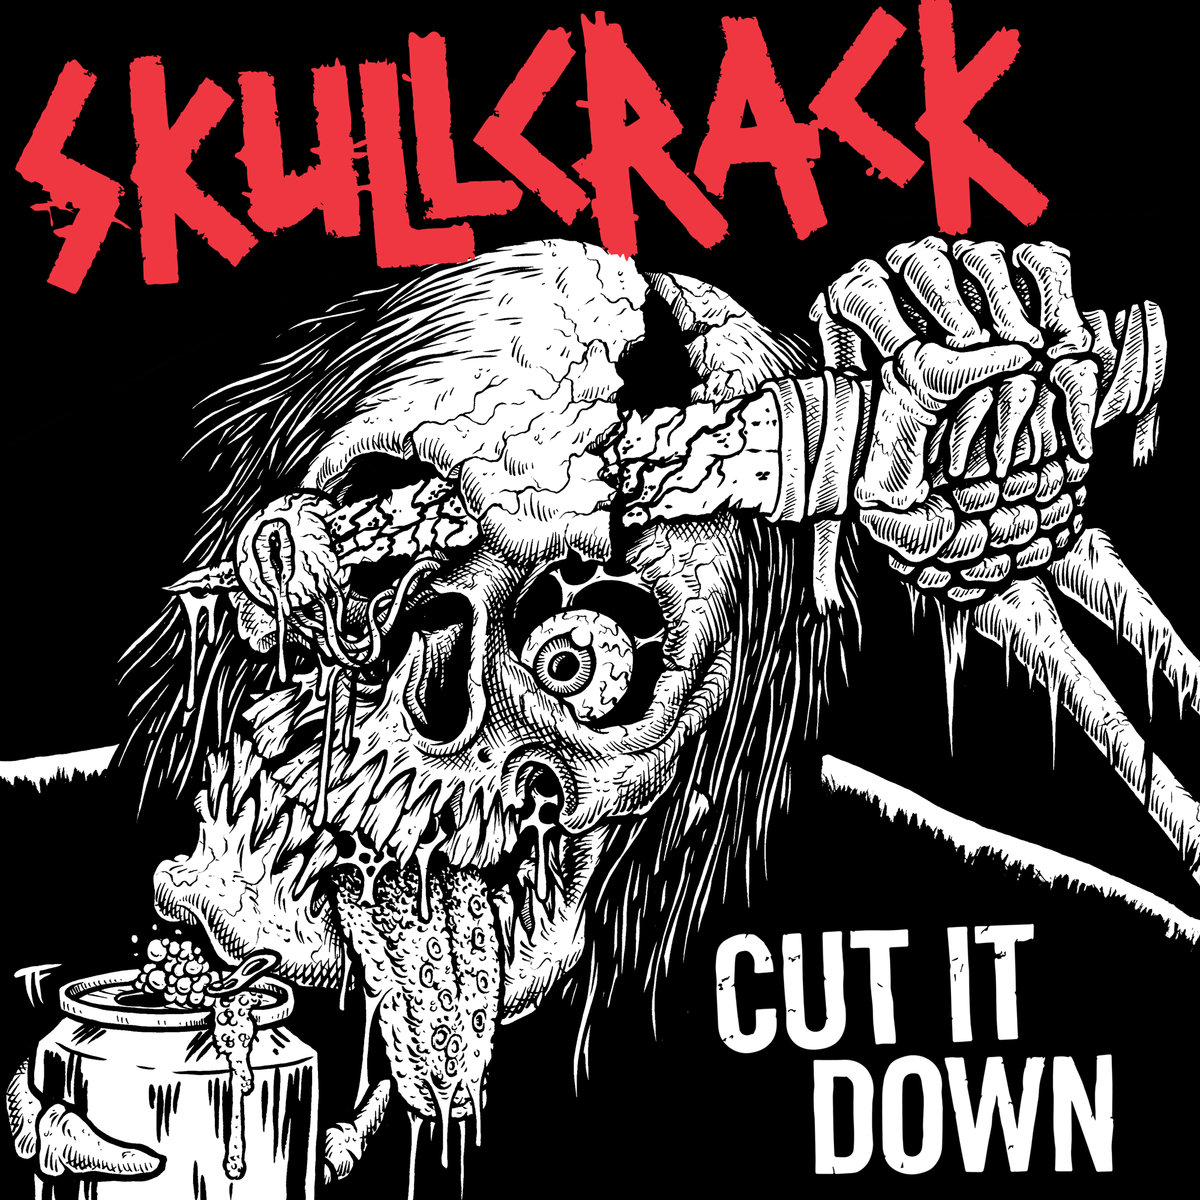 Skullcrack – Cut it down